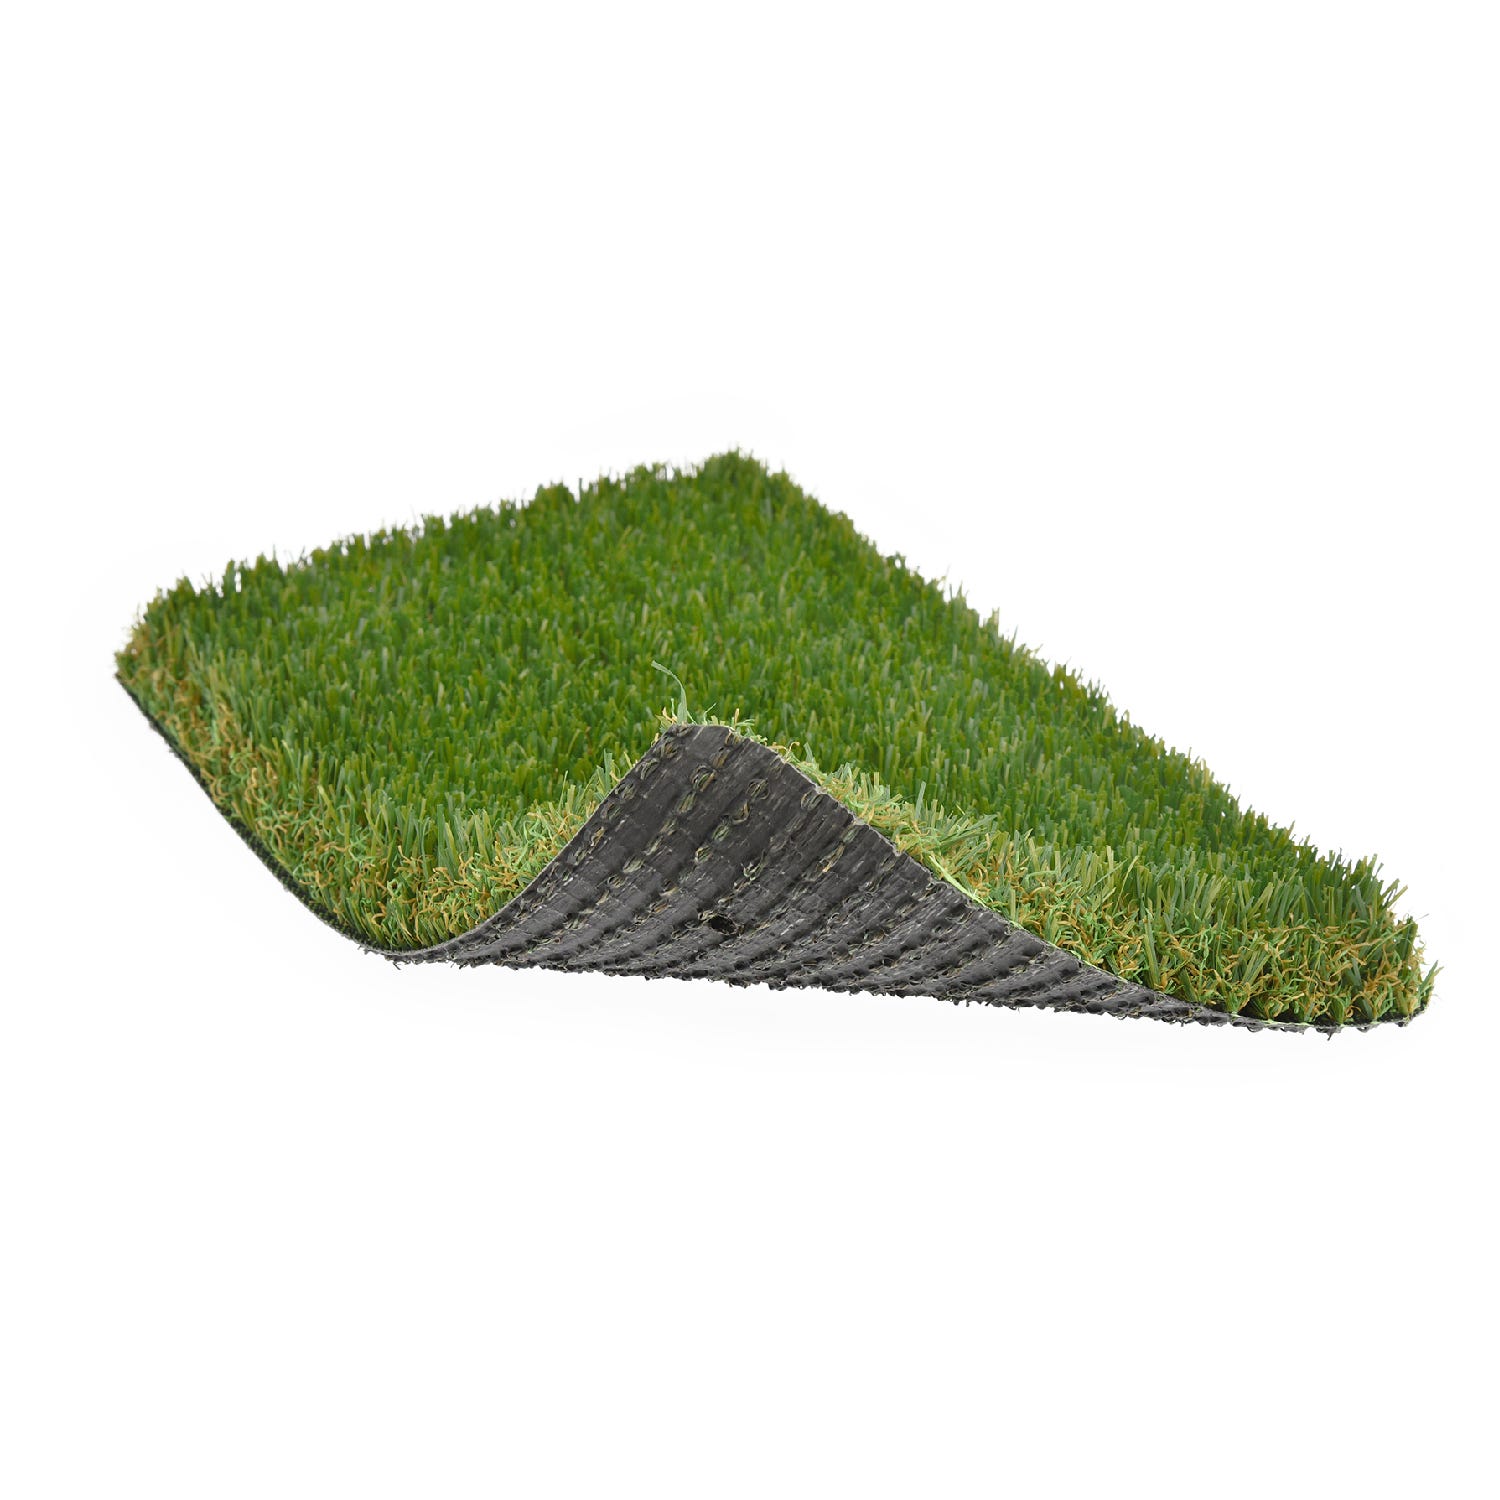 Rollo de césped artificial Grass 1x5 m y 6 mm de altura de fibras